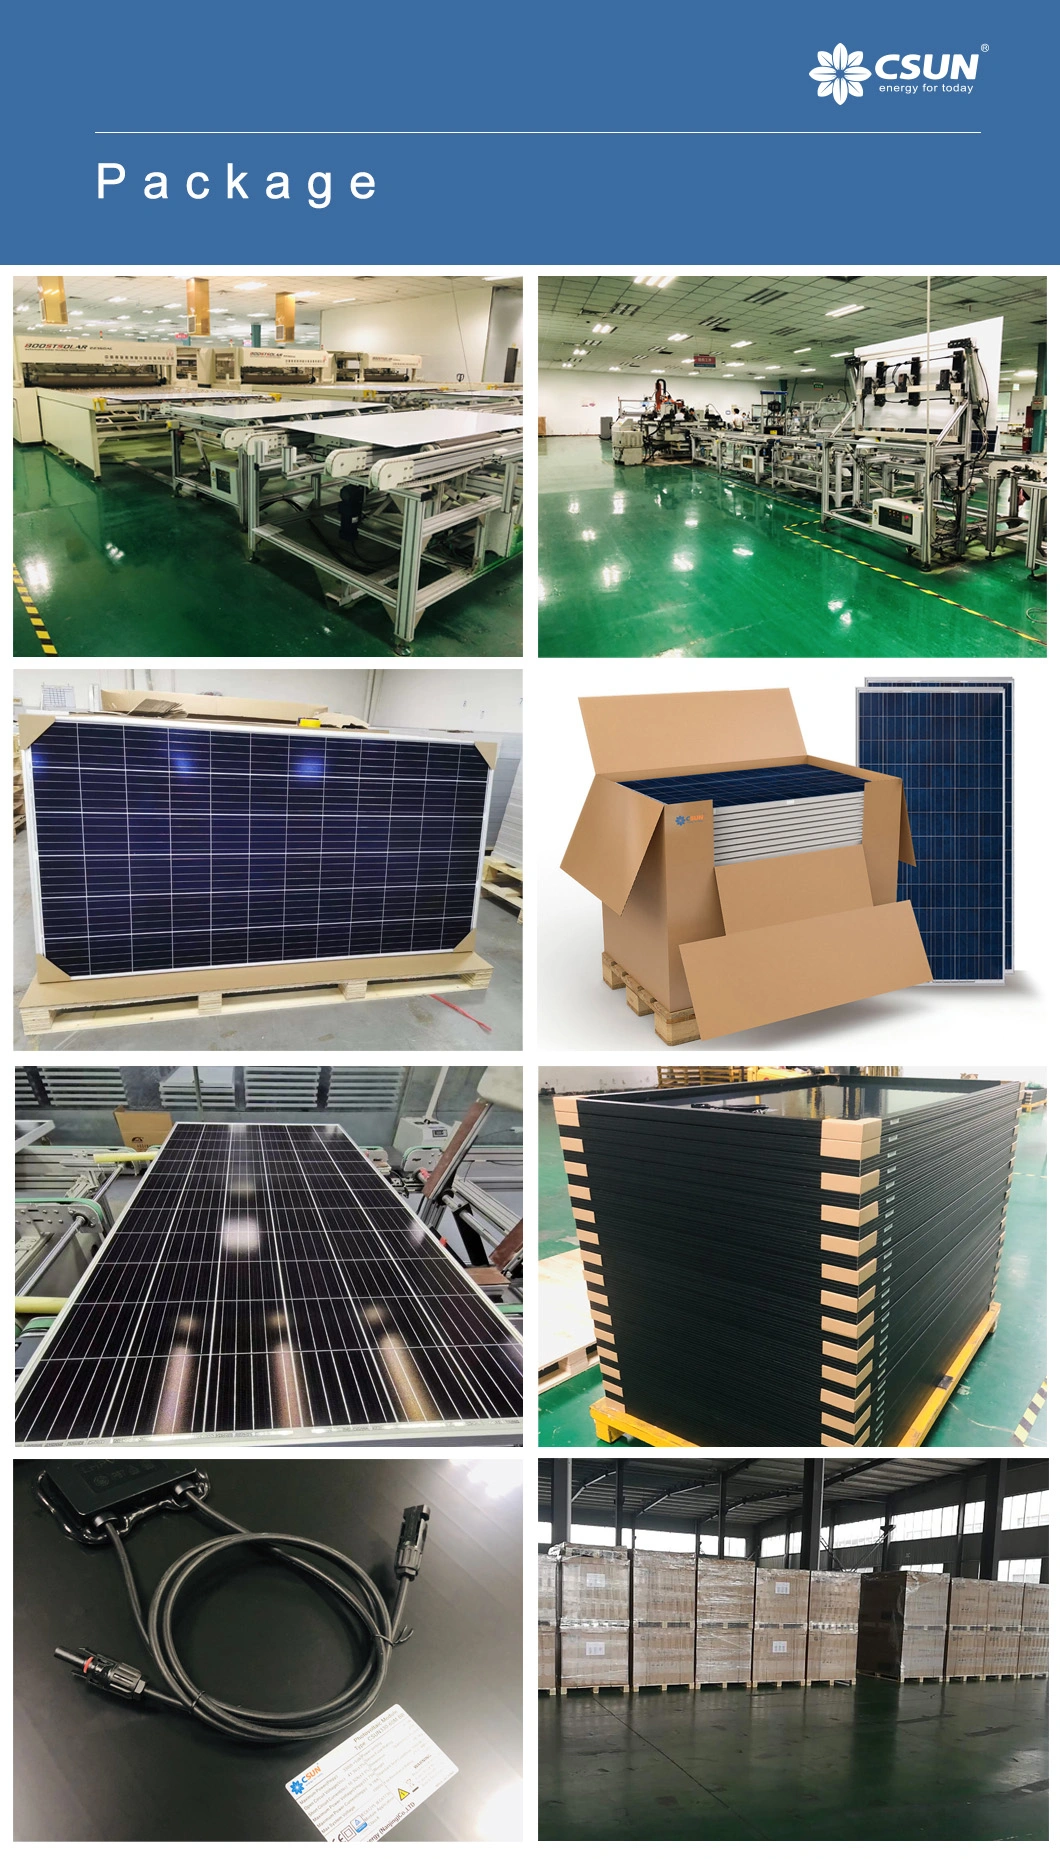 Solar Cells 375W PV Mono Solar Panel for Solar Power System